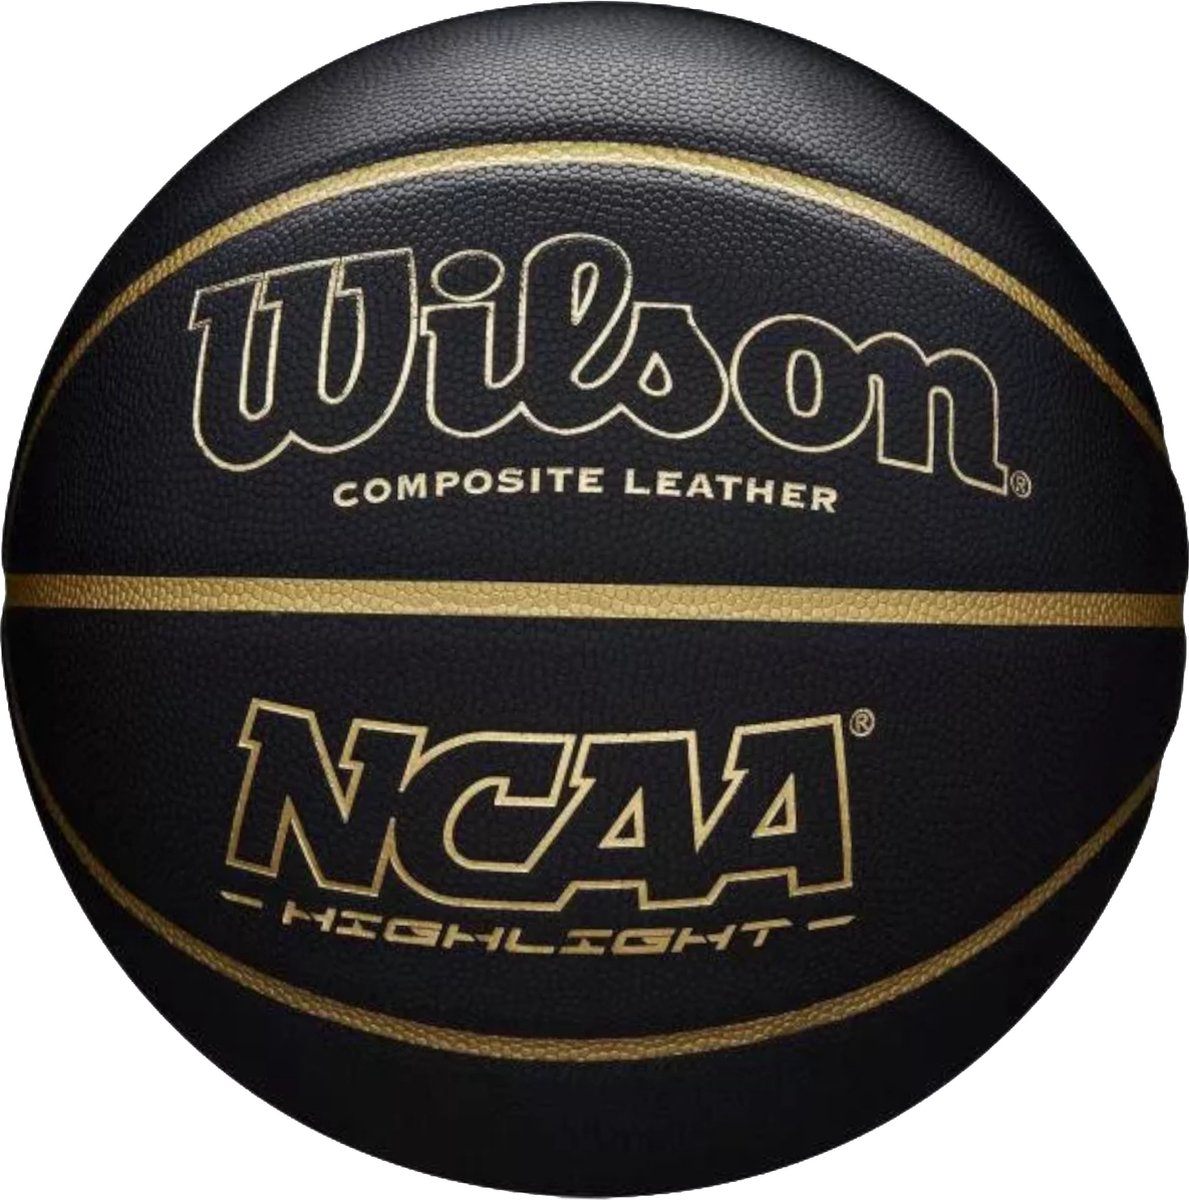 Wilson NCAA Highlight 295 Veľkosť: size: 7